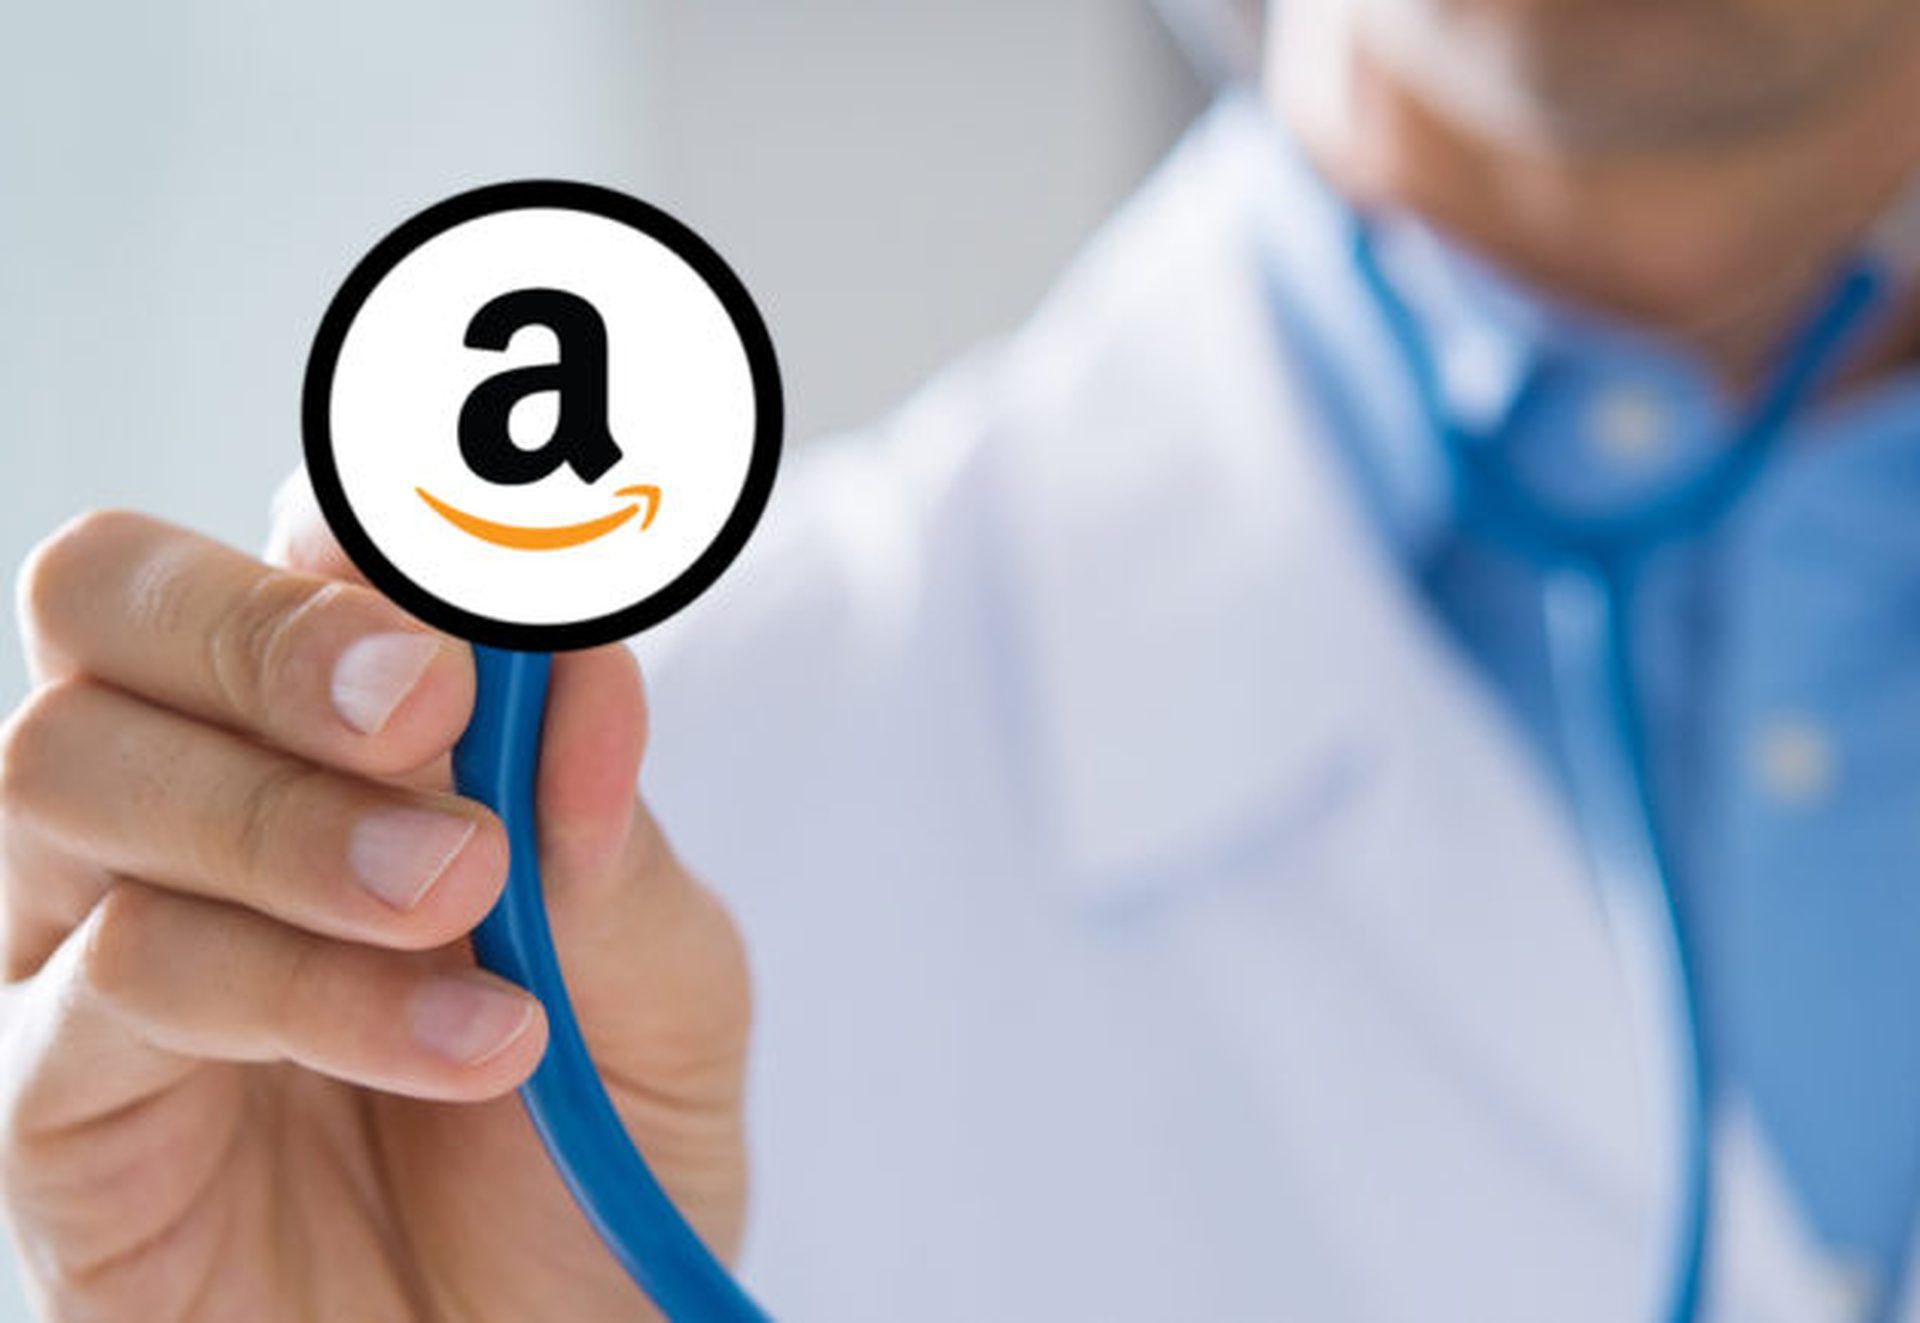 Amazon RxPass: получайте рецептурные лекарства в аптеке Amazon.